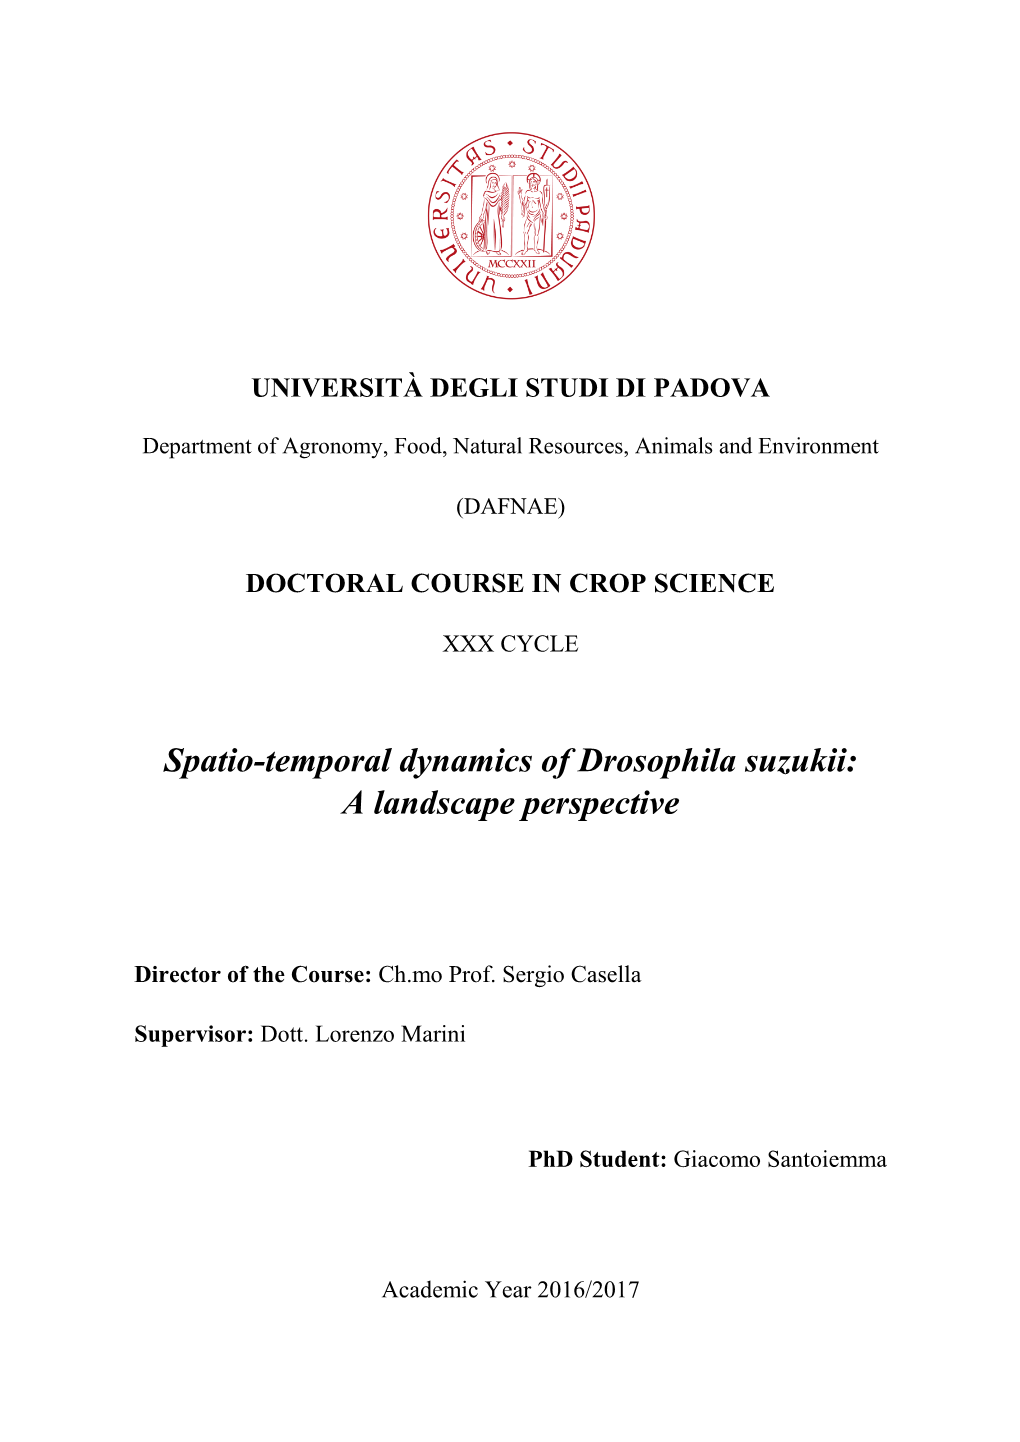 Spatio-Temporal Dynamics of Drosophila Suzukii: a Landscape Perspective